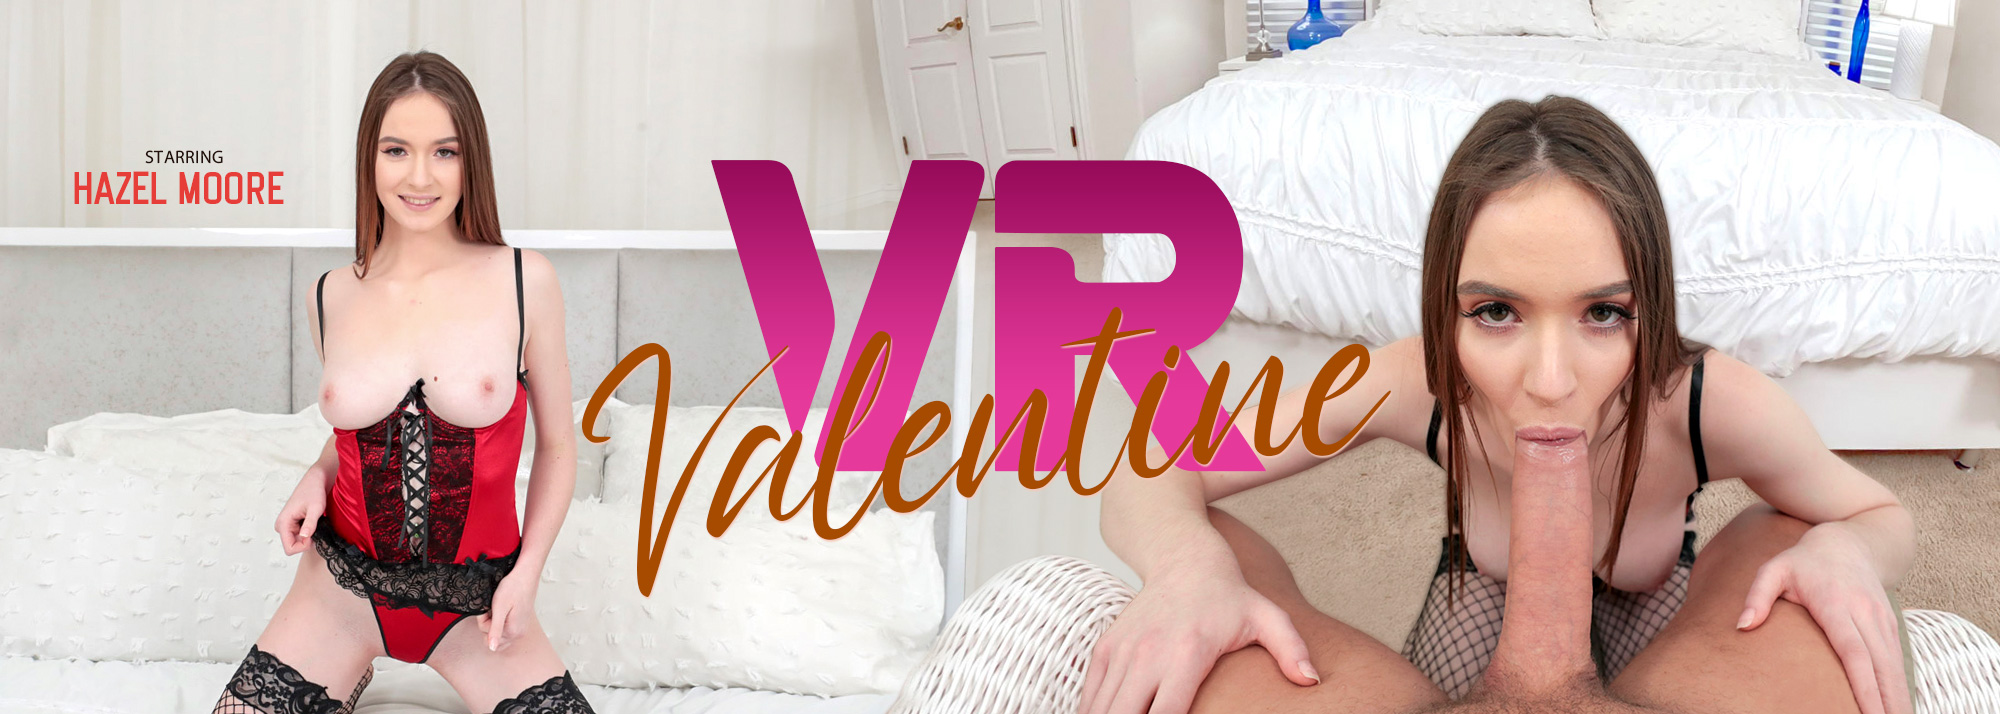 VR Valentine - VR Porn Video, Starring: Hazel Moore